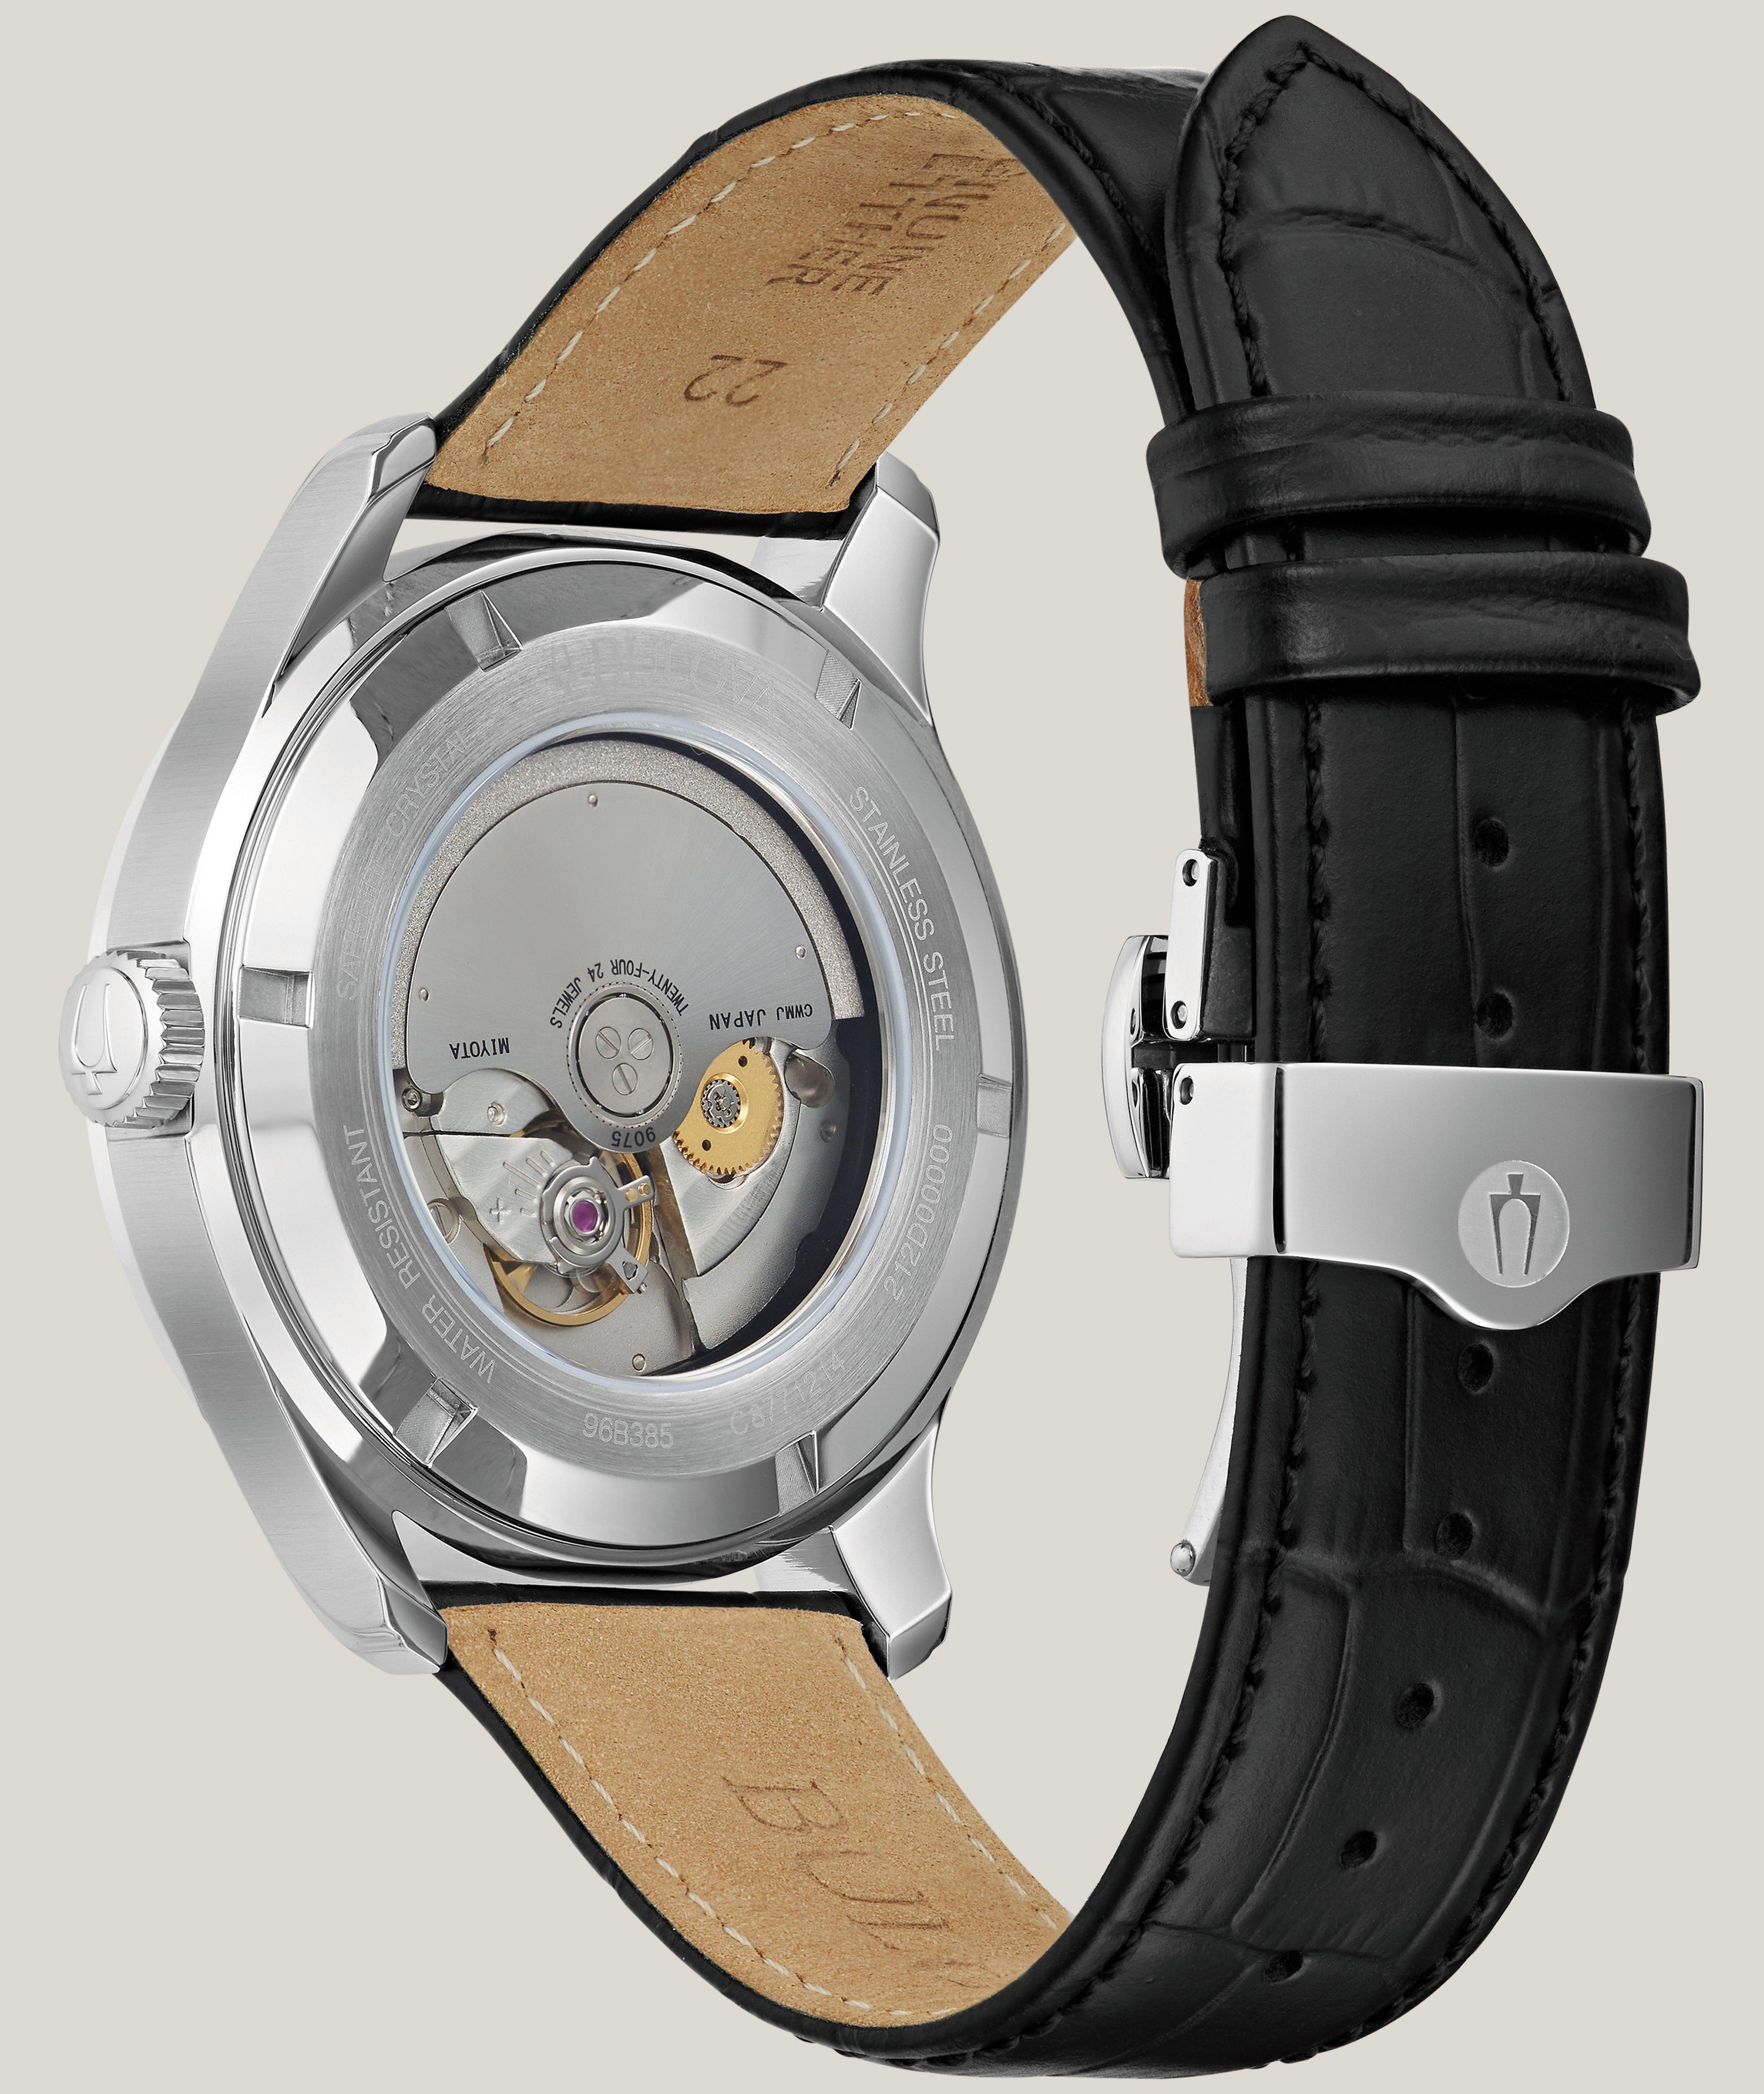 Wilton GMT Watch image 2